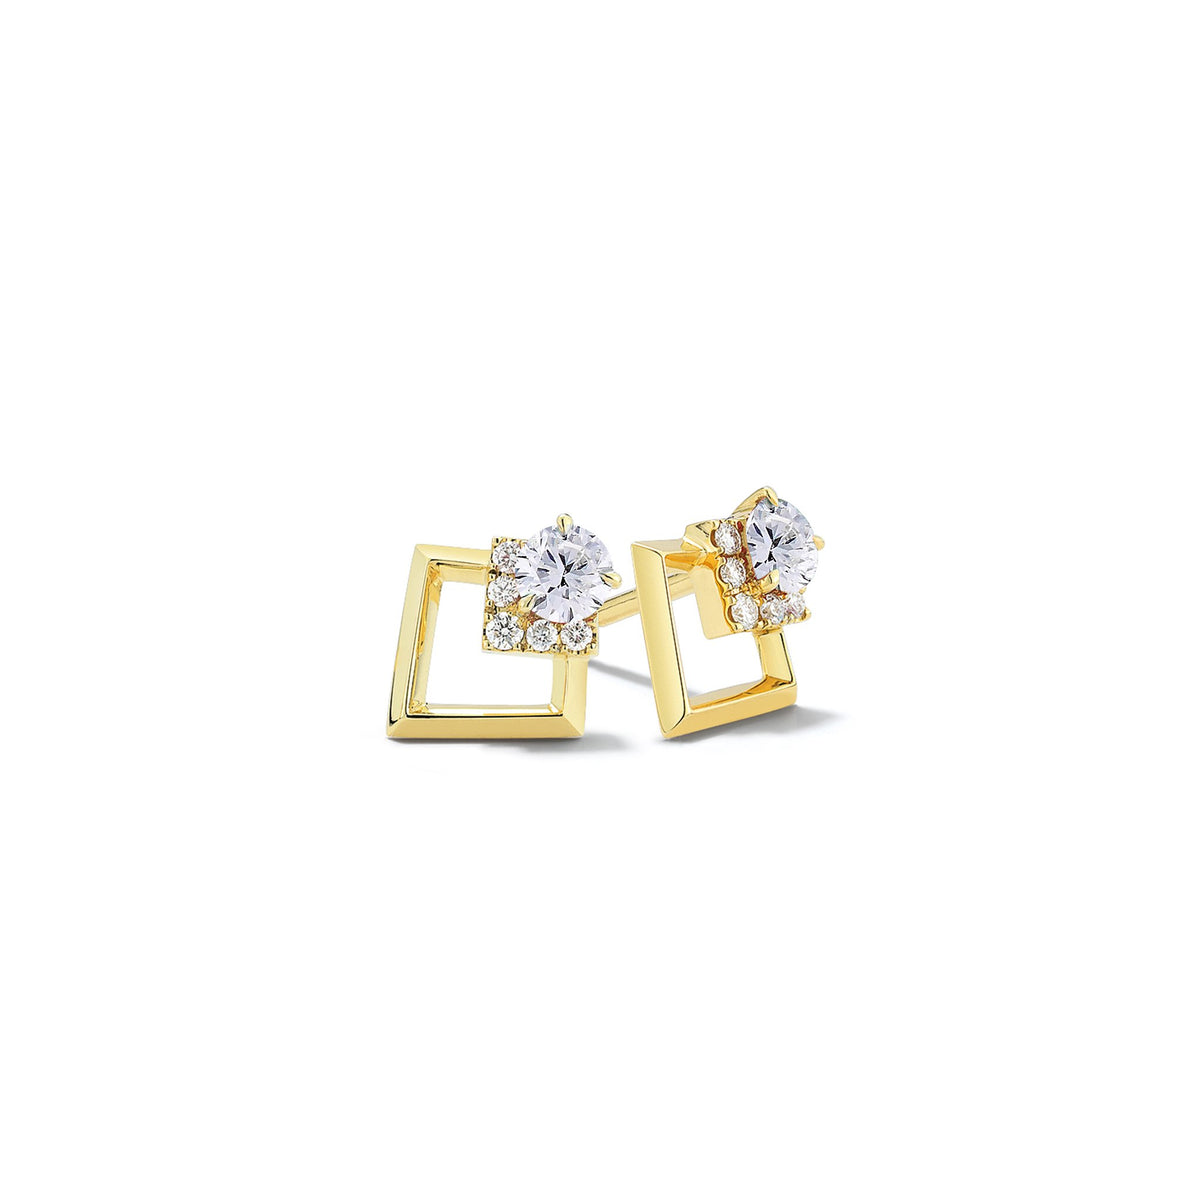 Valani 18K Yellow Gold Rive Diamond Earrings